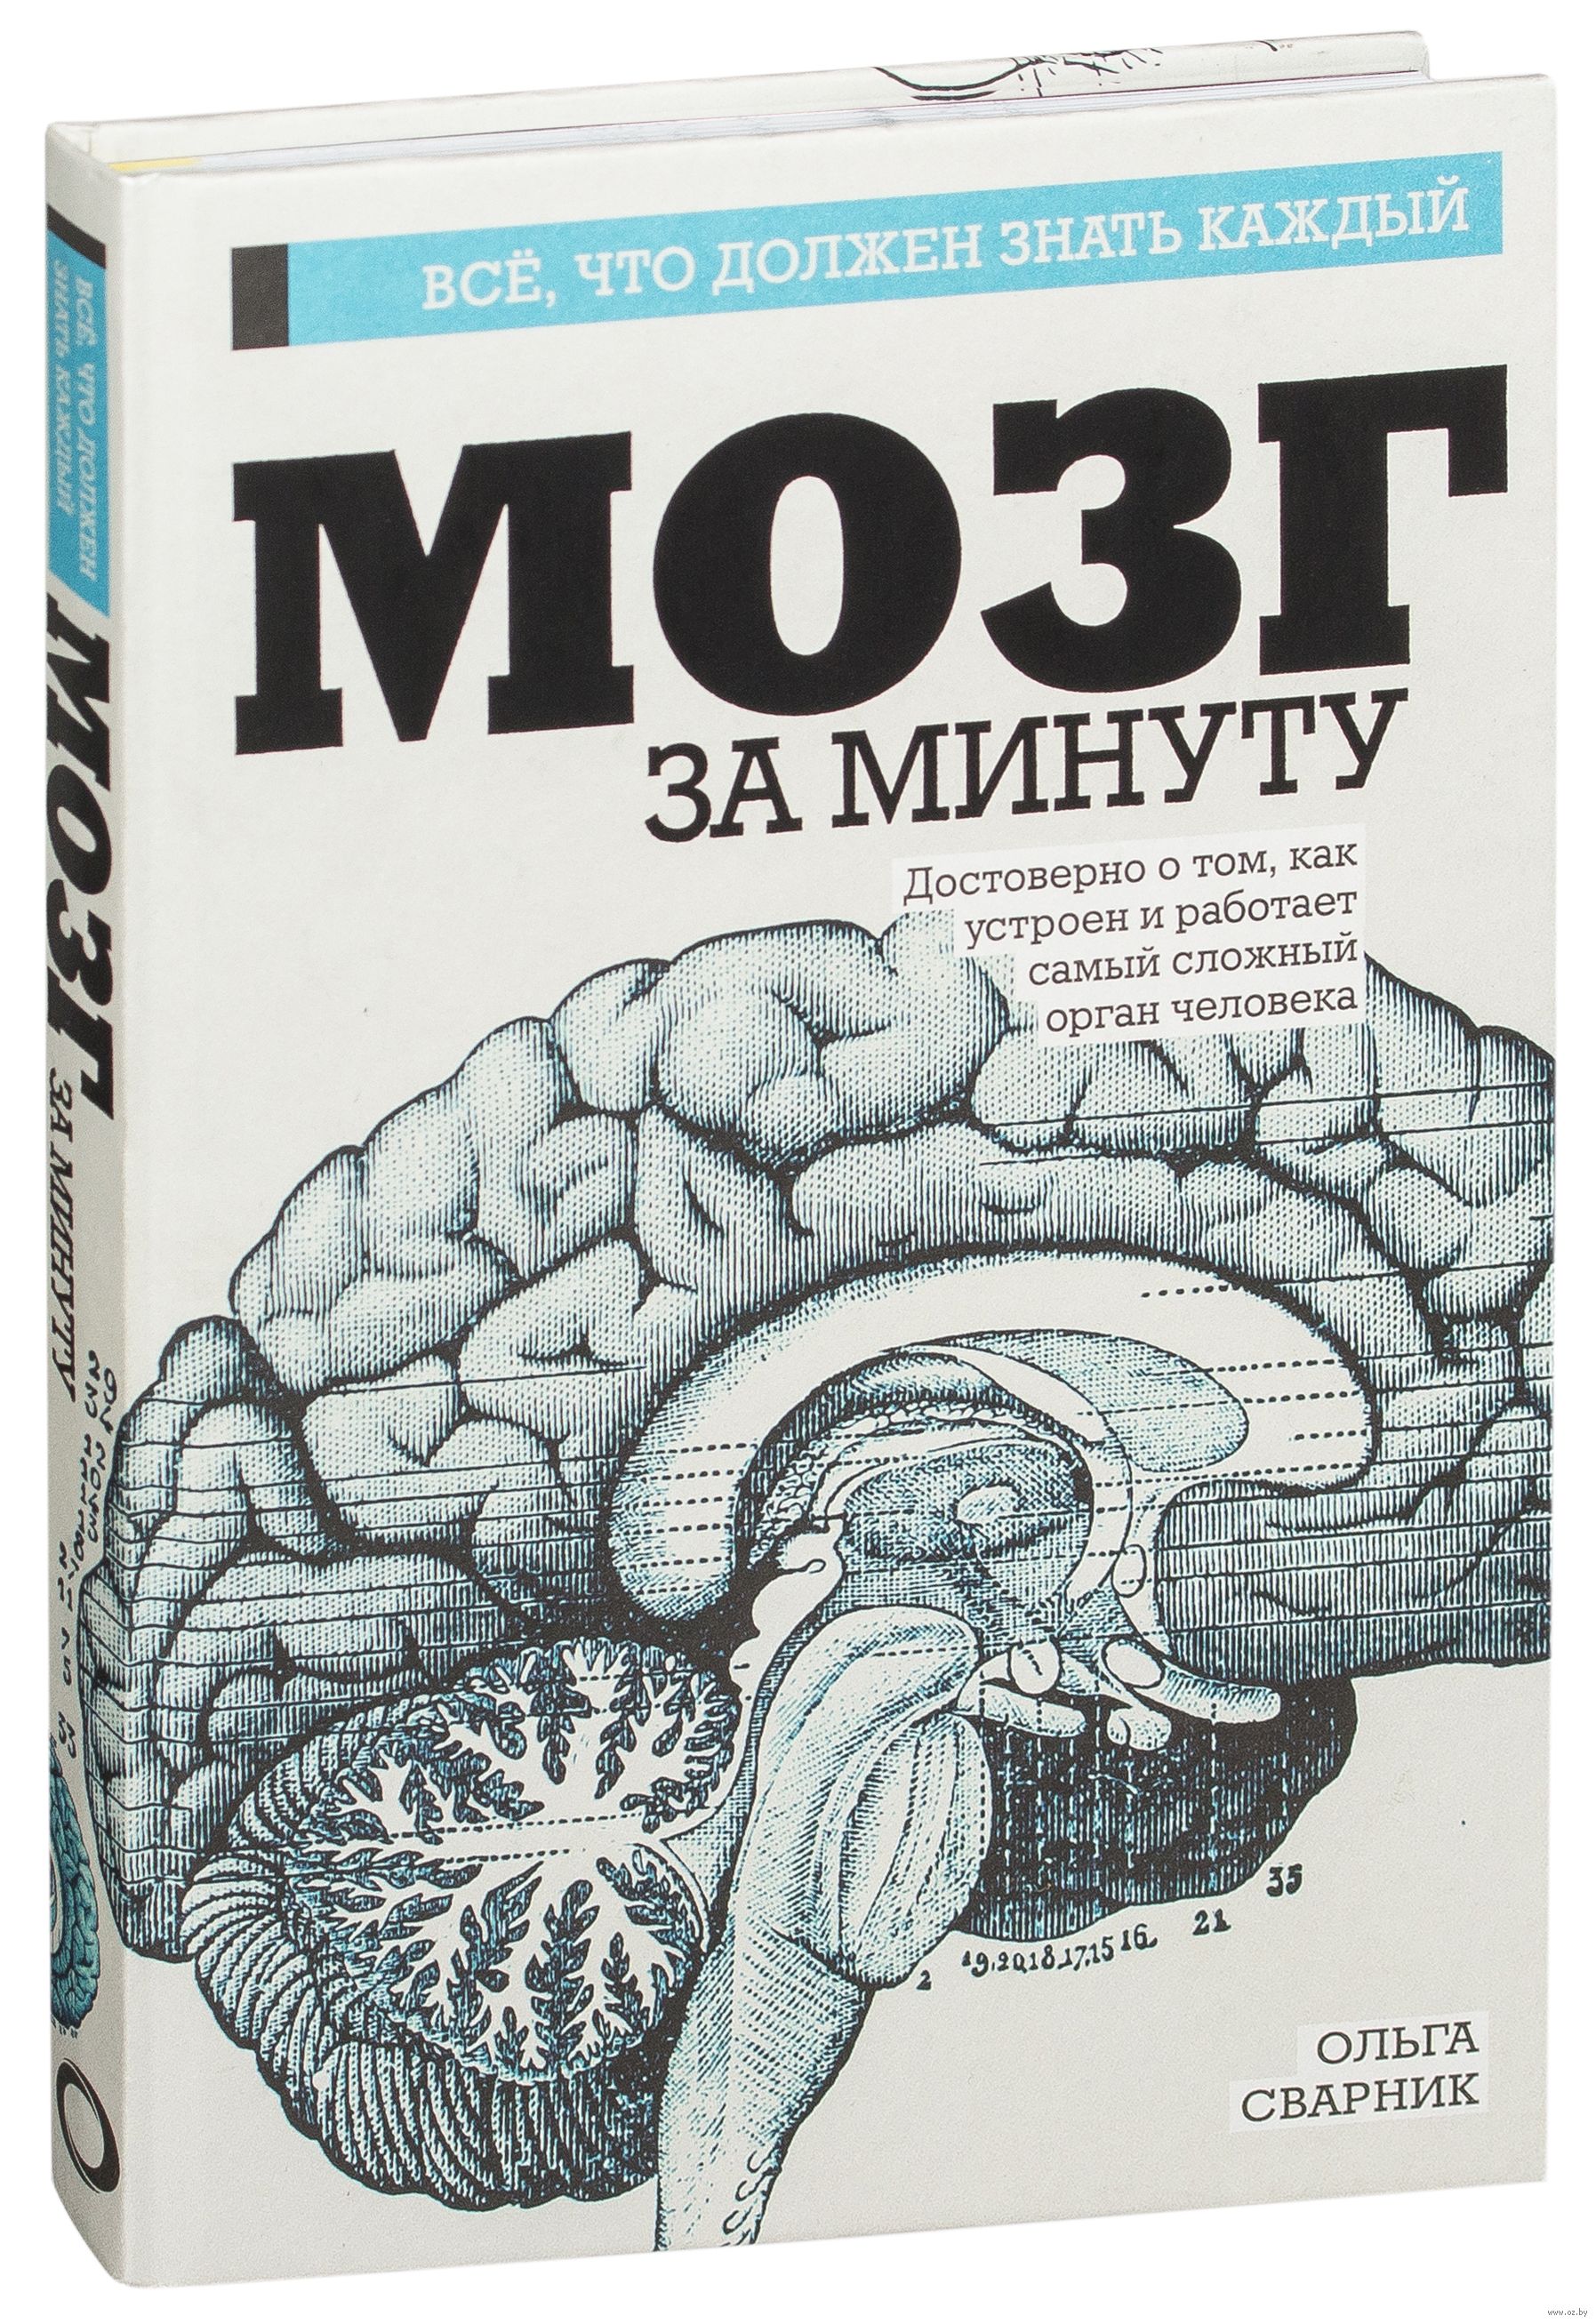 Book brain. Книга мозг. Книга про мозг человека.